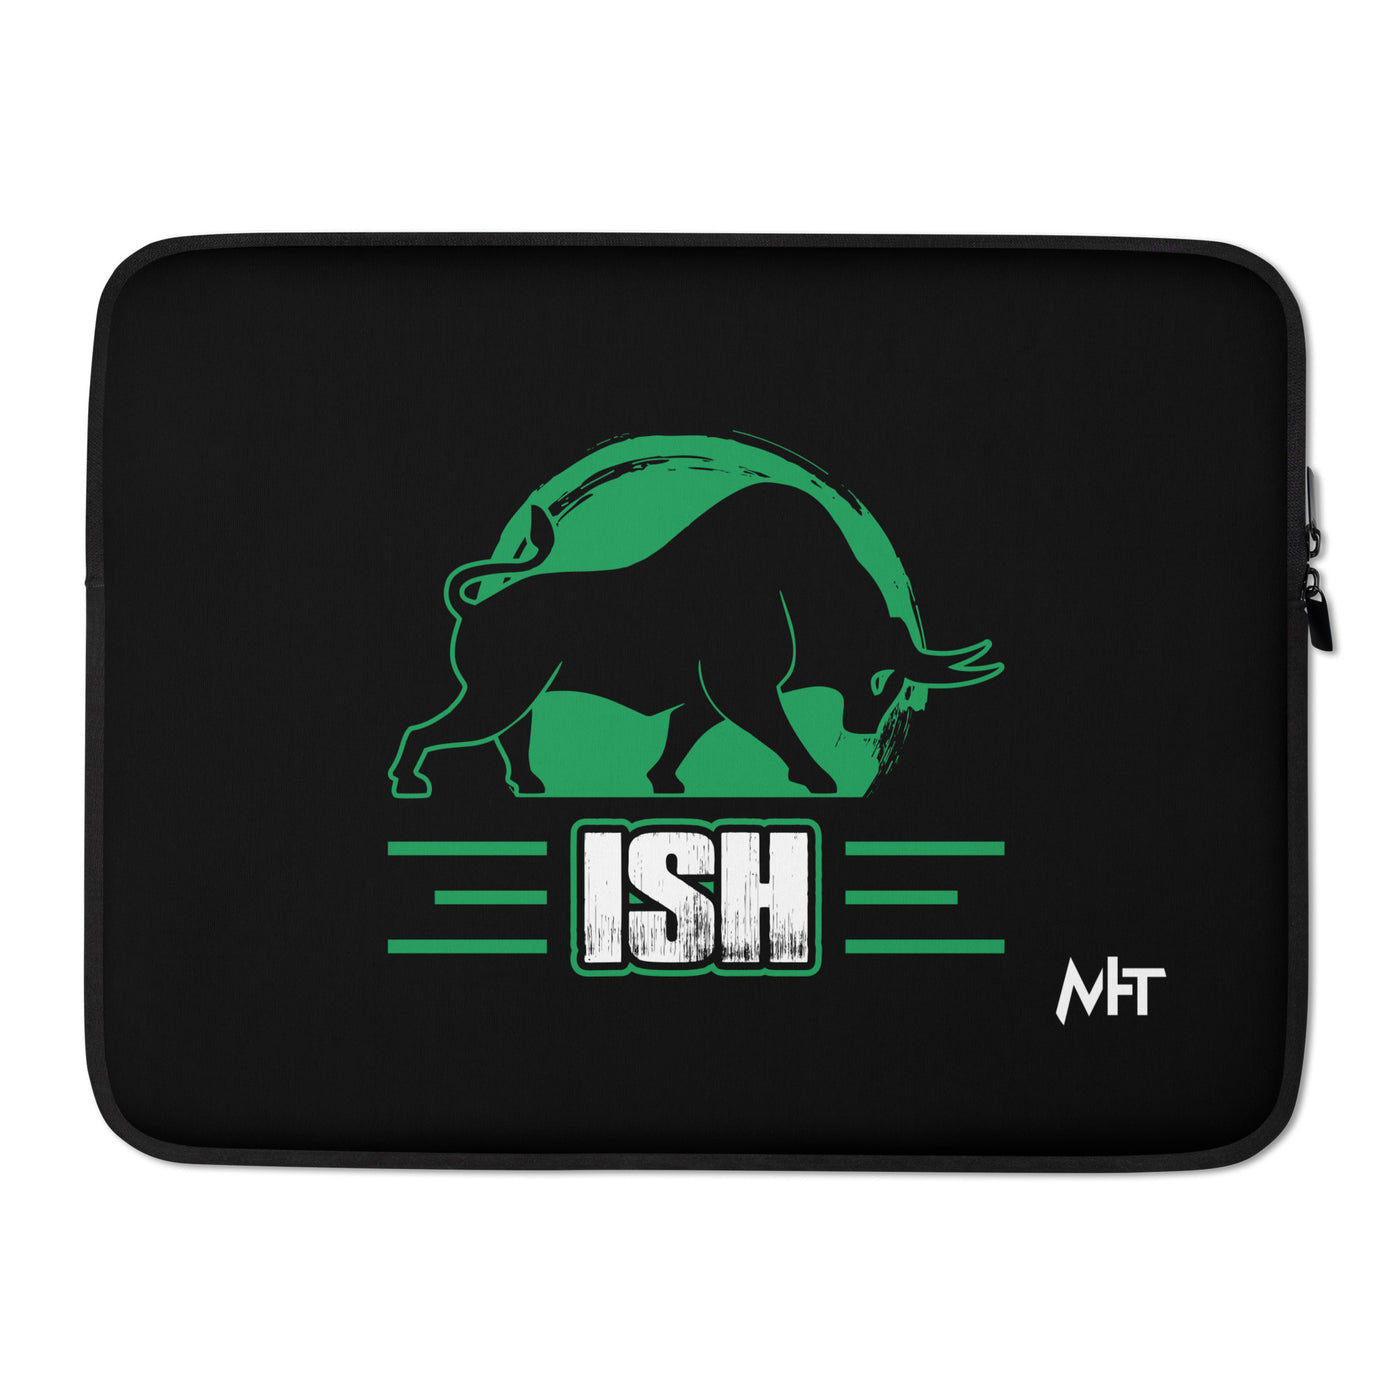 ISH (MAHFUZ) - Laptop Sleeve